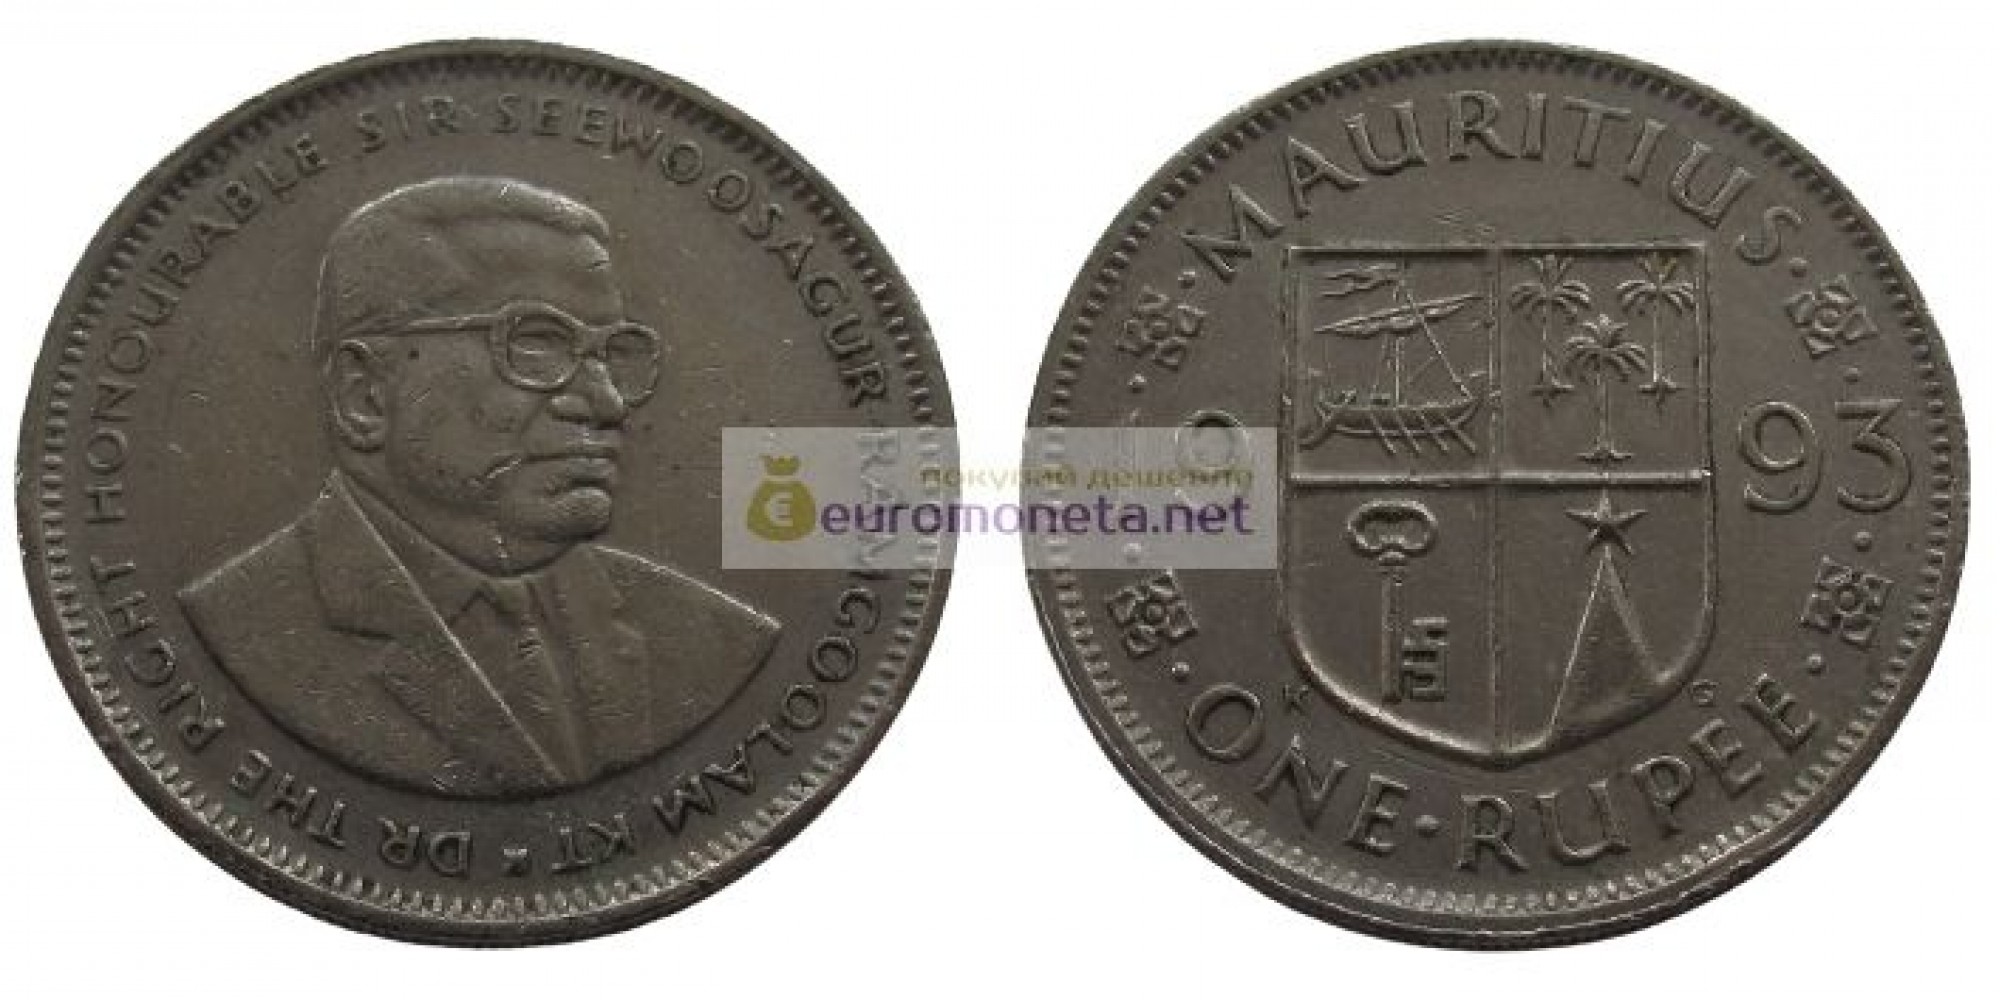 Маврикий 1 рупия 1993 год. Сивусагур Рамгулам